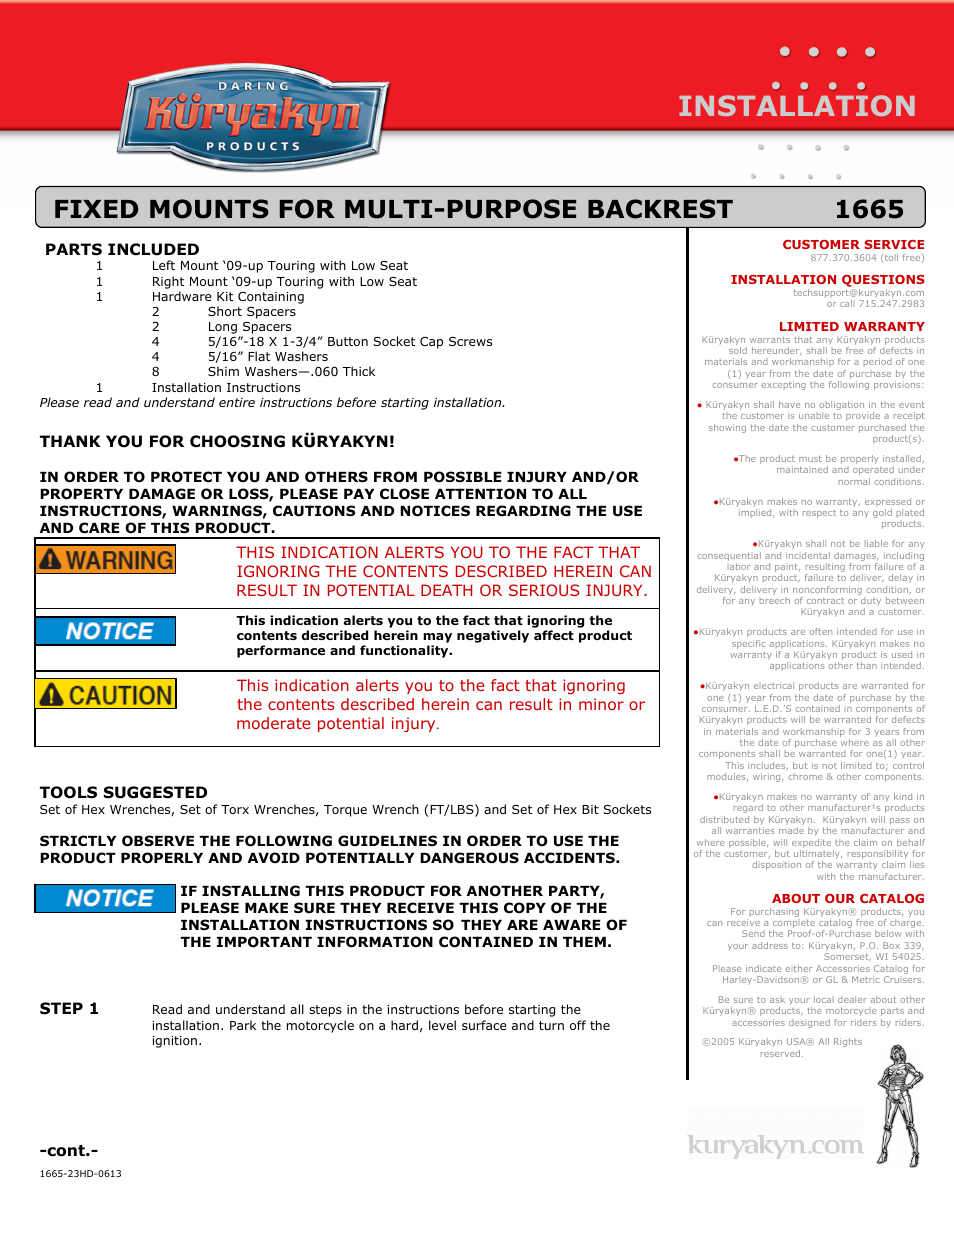 1665 FIXED MOUNTS FOR MULTI-PURPOSE BACKREST